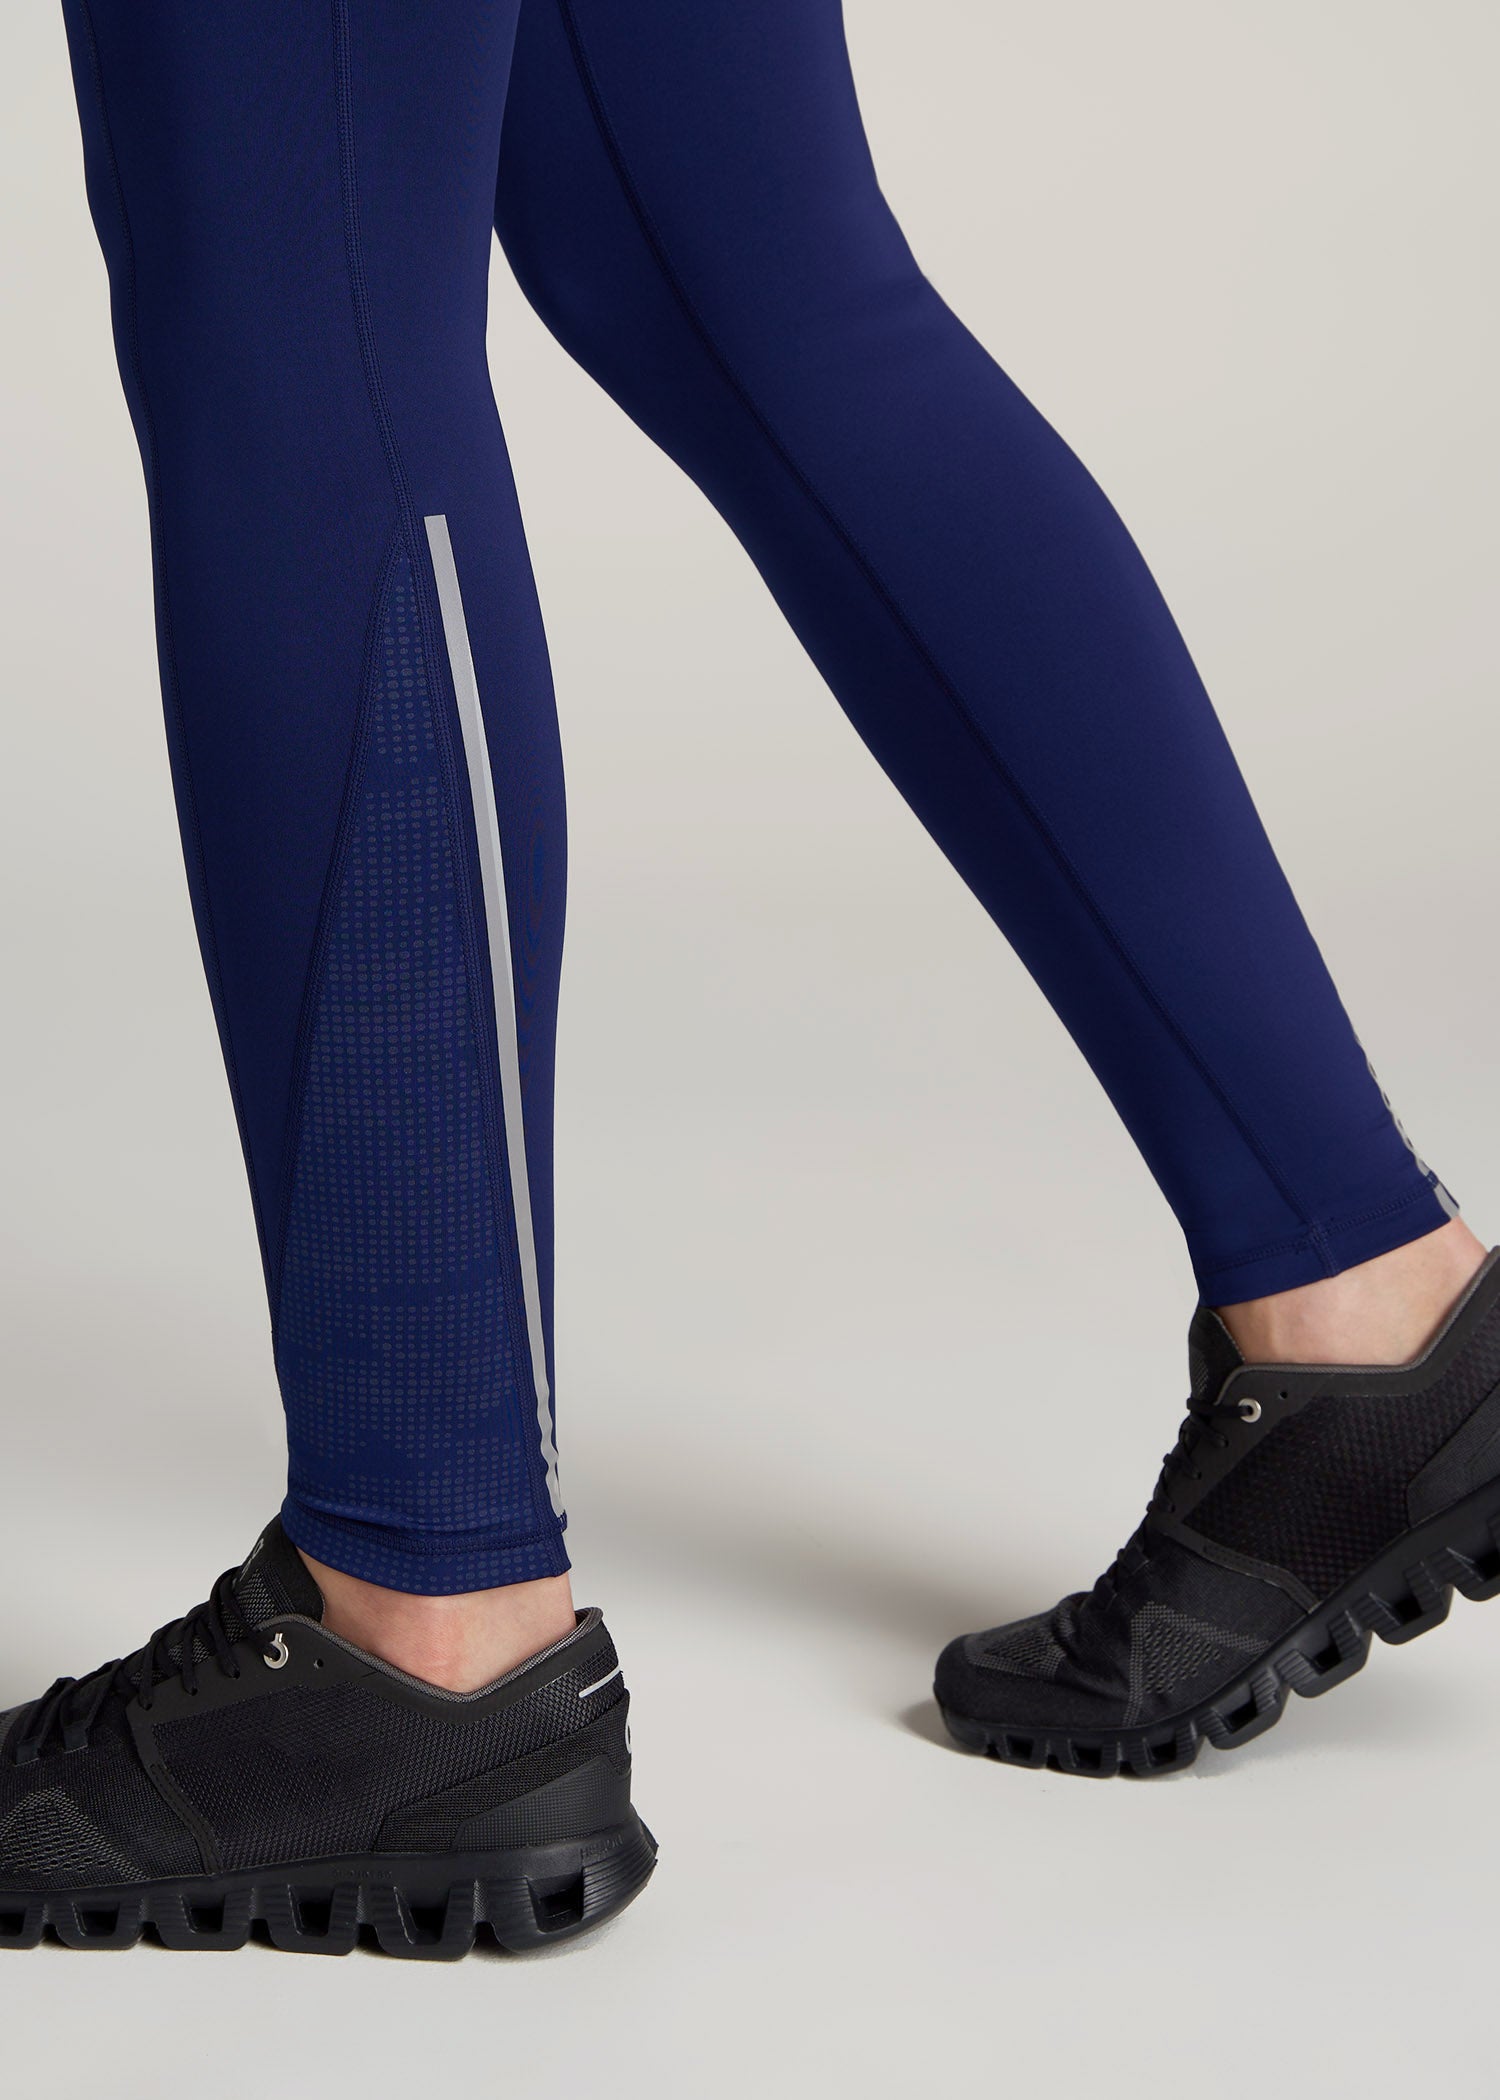    American-Tall-Women-Reflective-Run-Legging-Midnight-Blue-detail